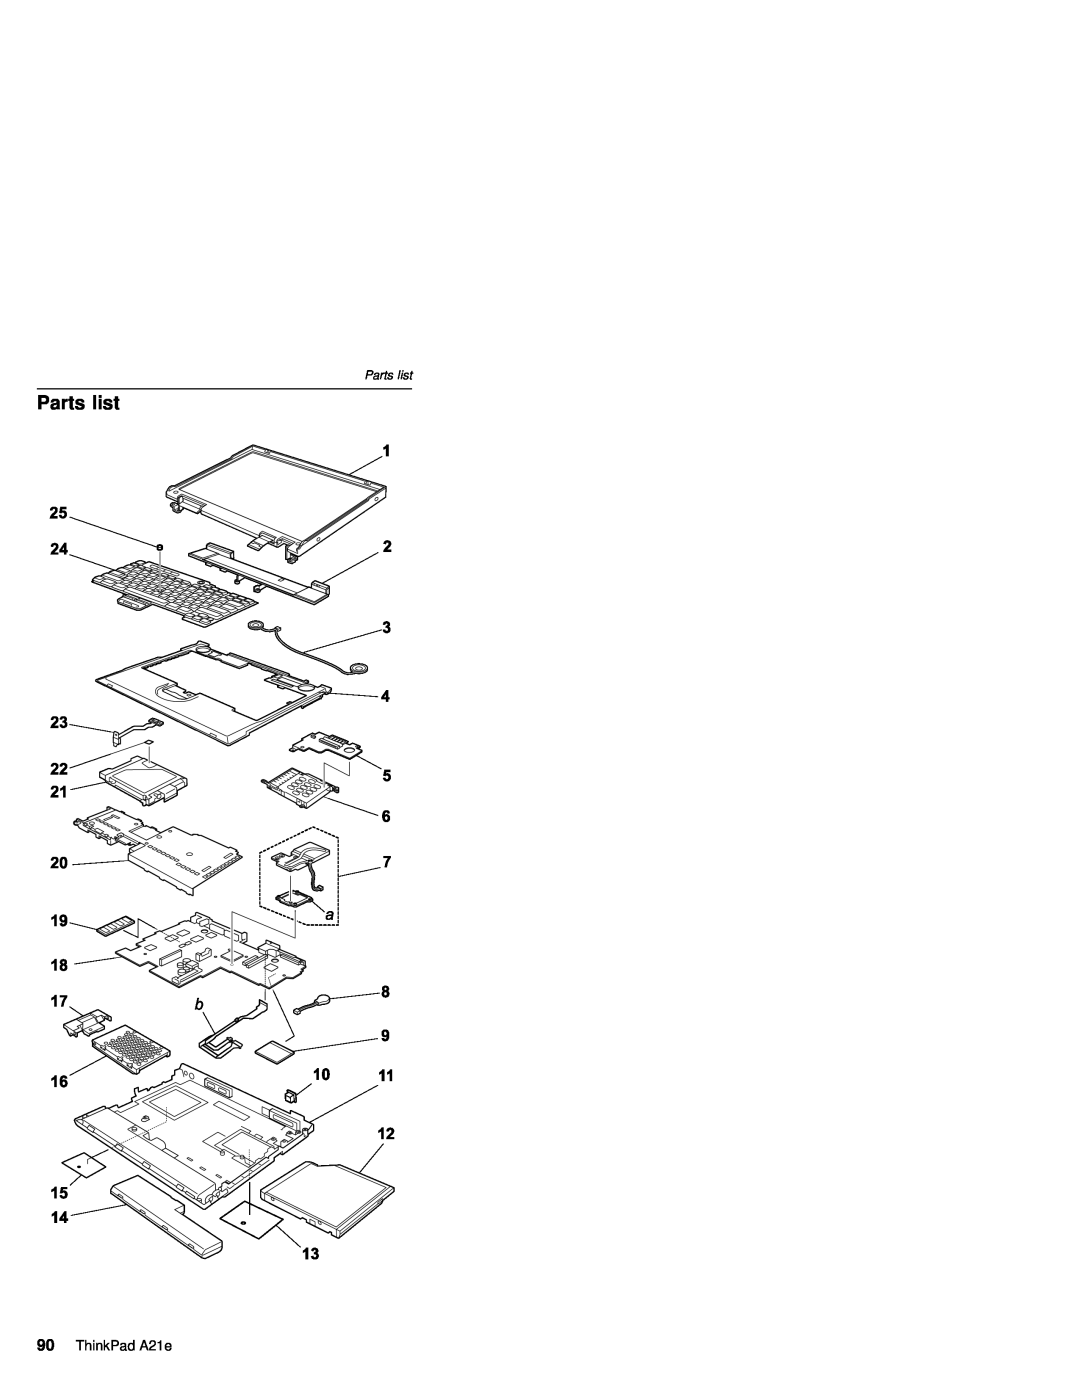 IBM MT 2632 manual Parts list, ThinkPad A21e 